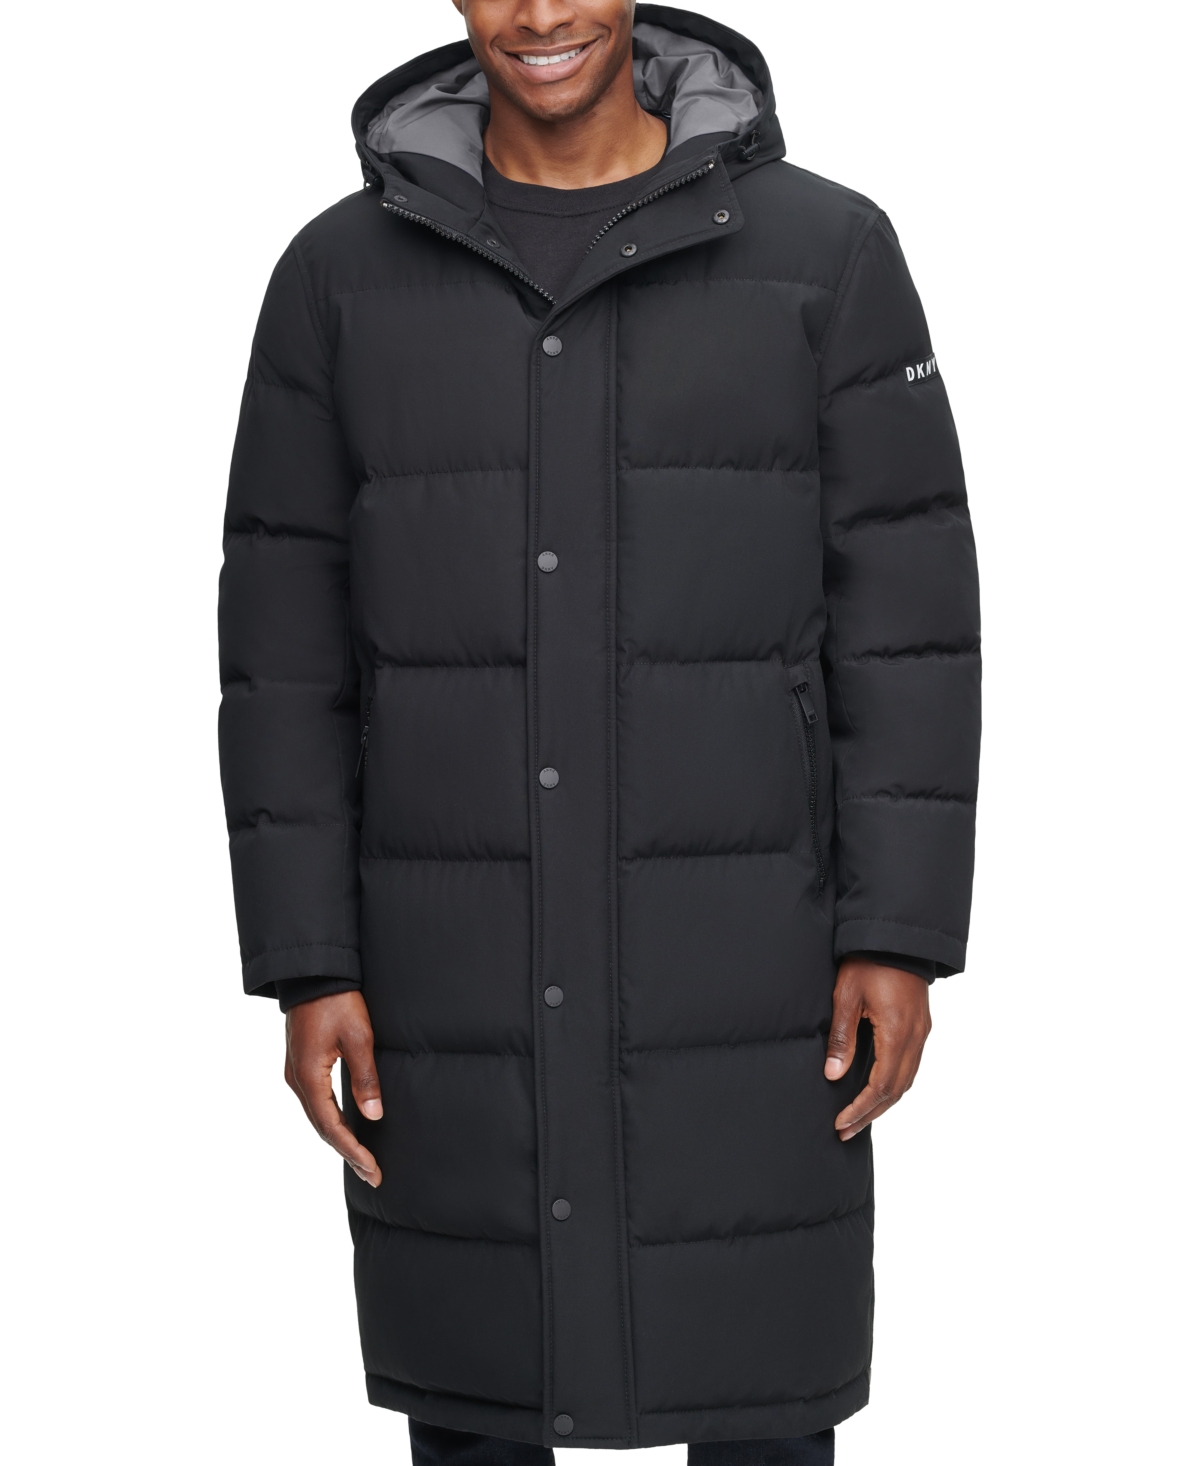 Long Hooded Parka Men's Jacket, Created for Macy's - Black